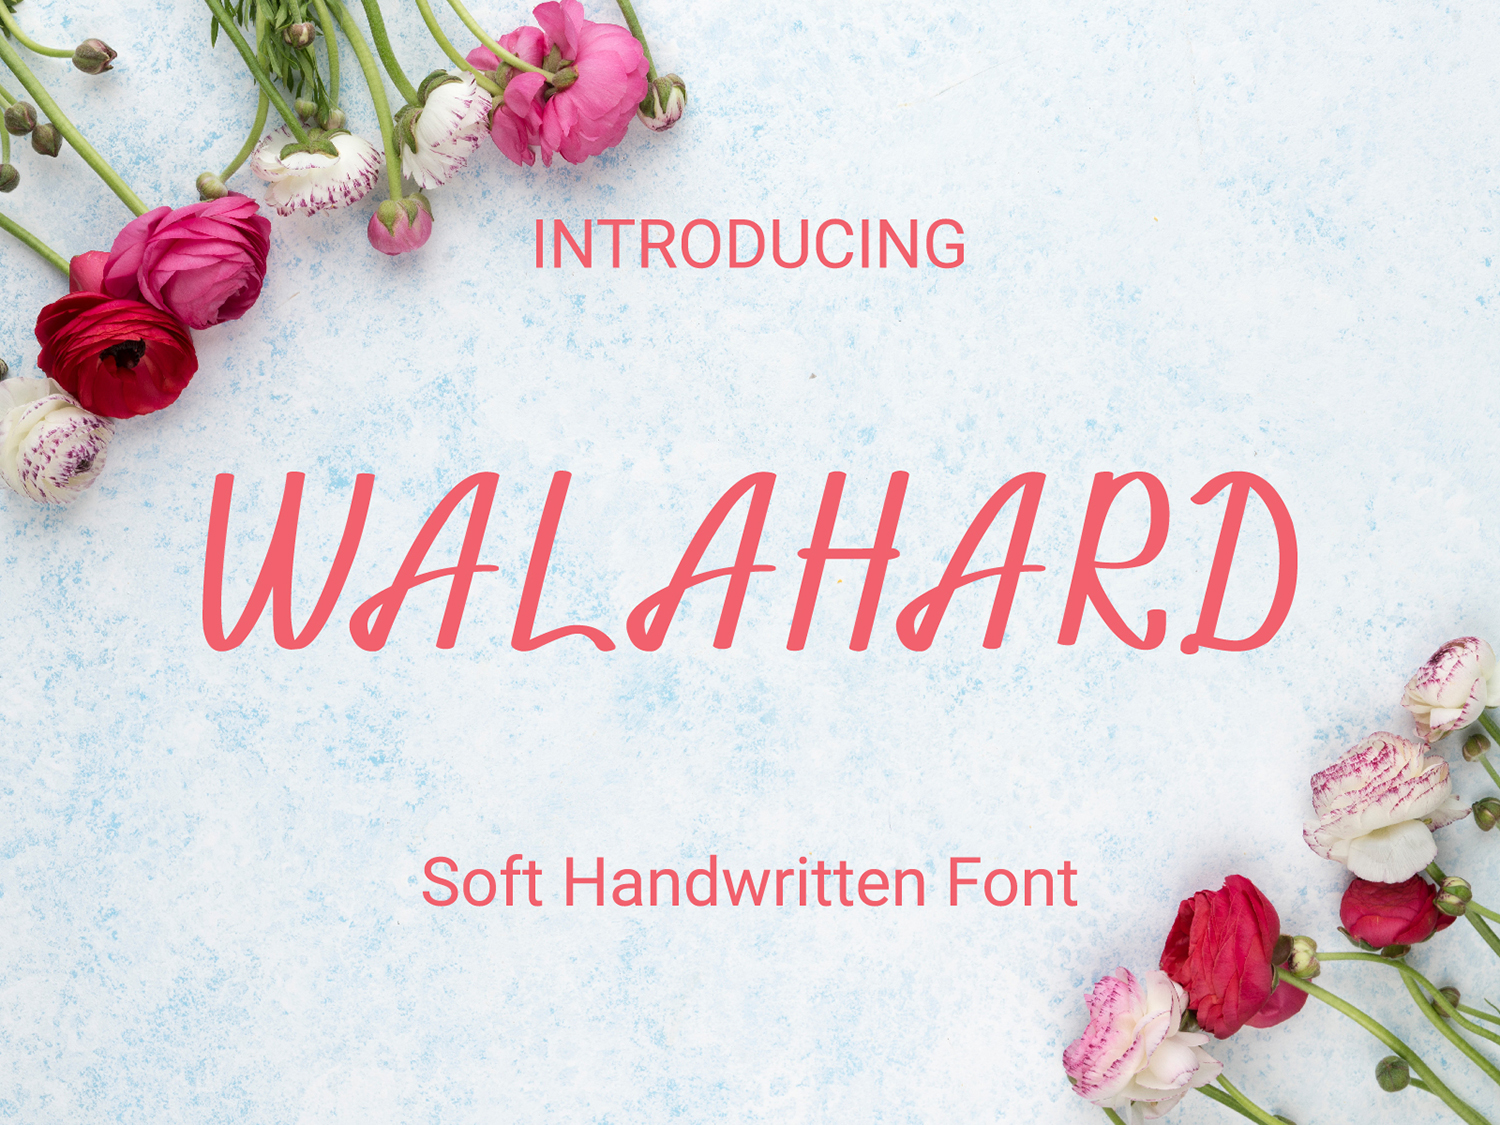 Walahard Free Font